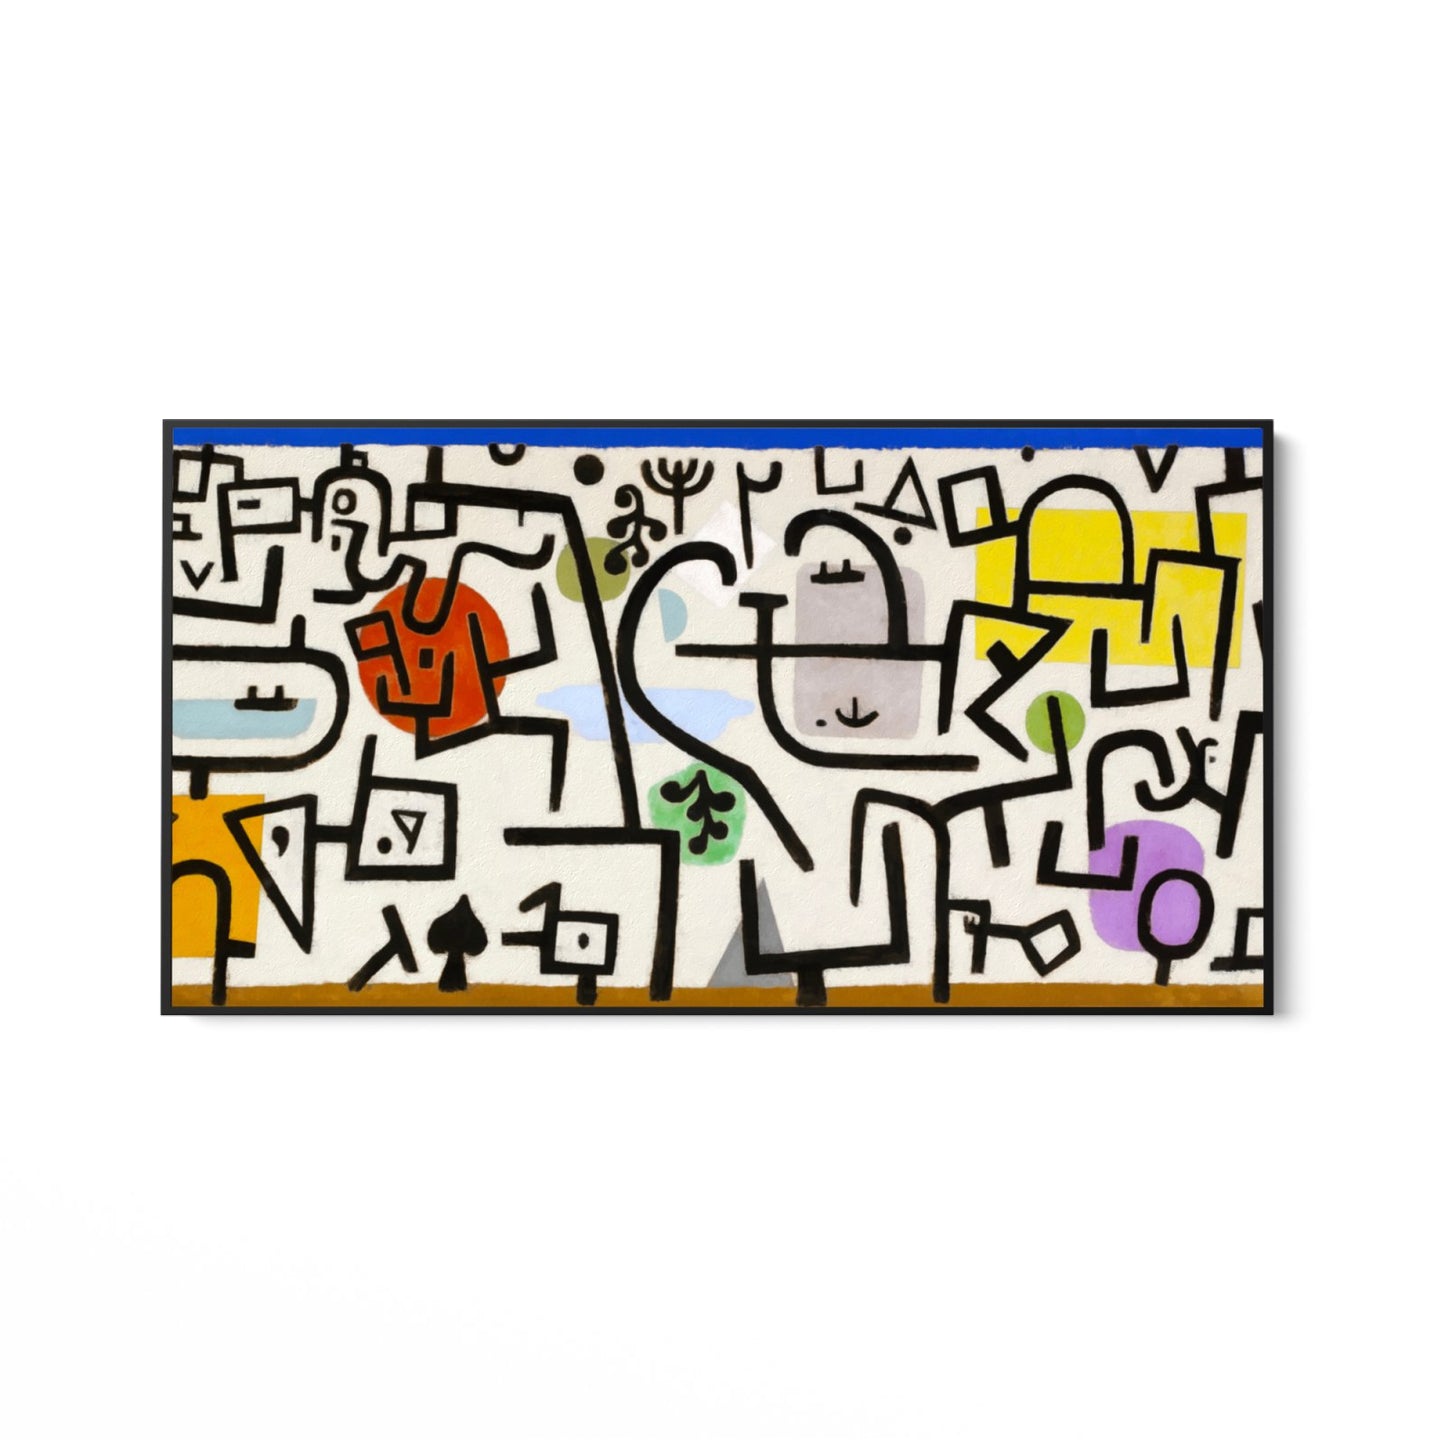 Paul Klee, Bogaty Port